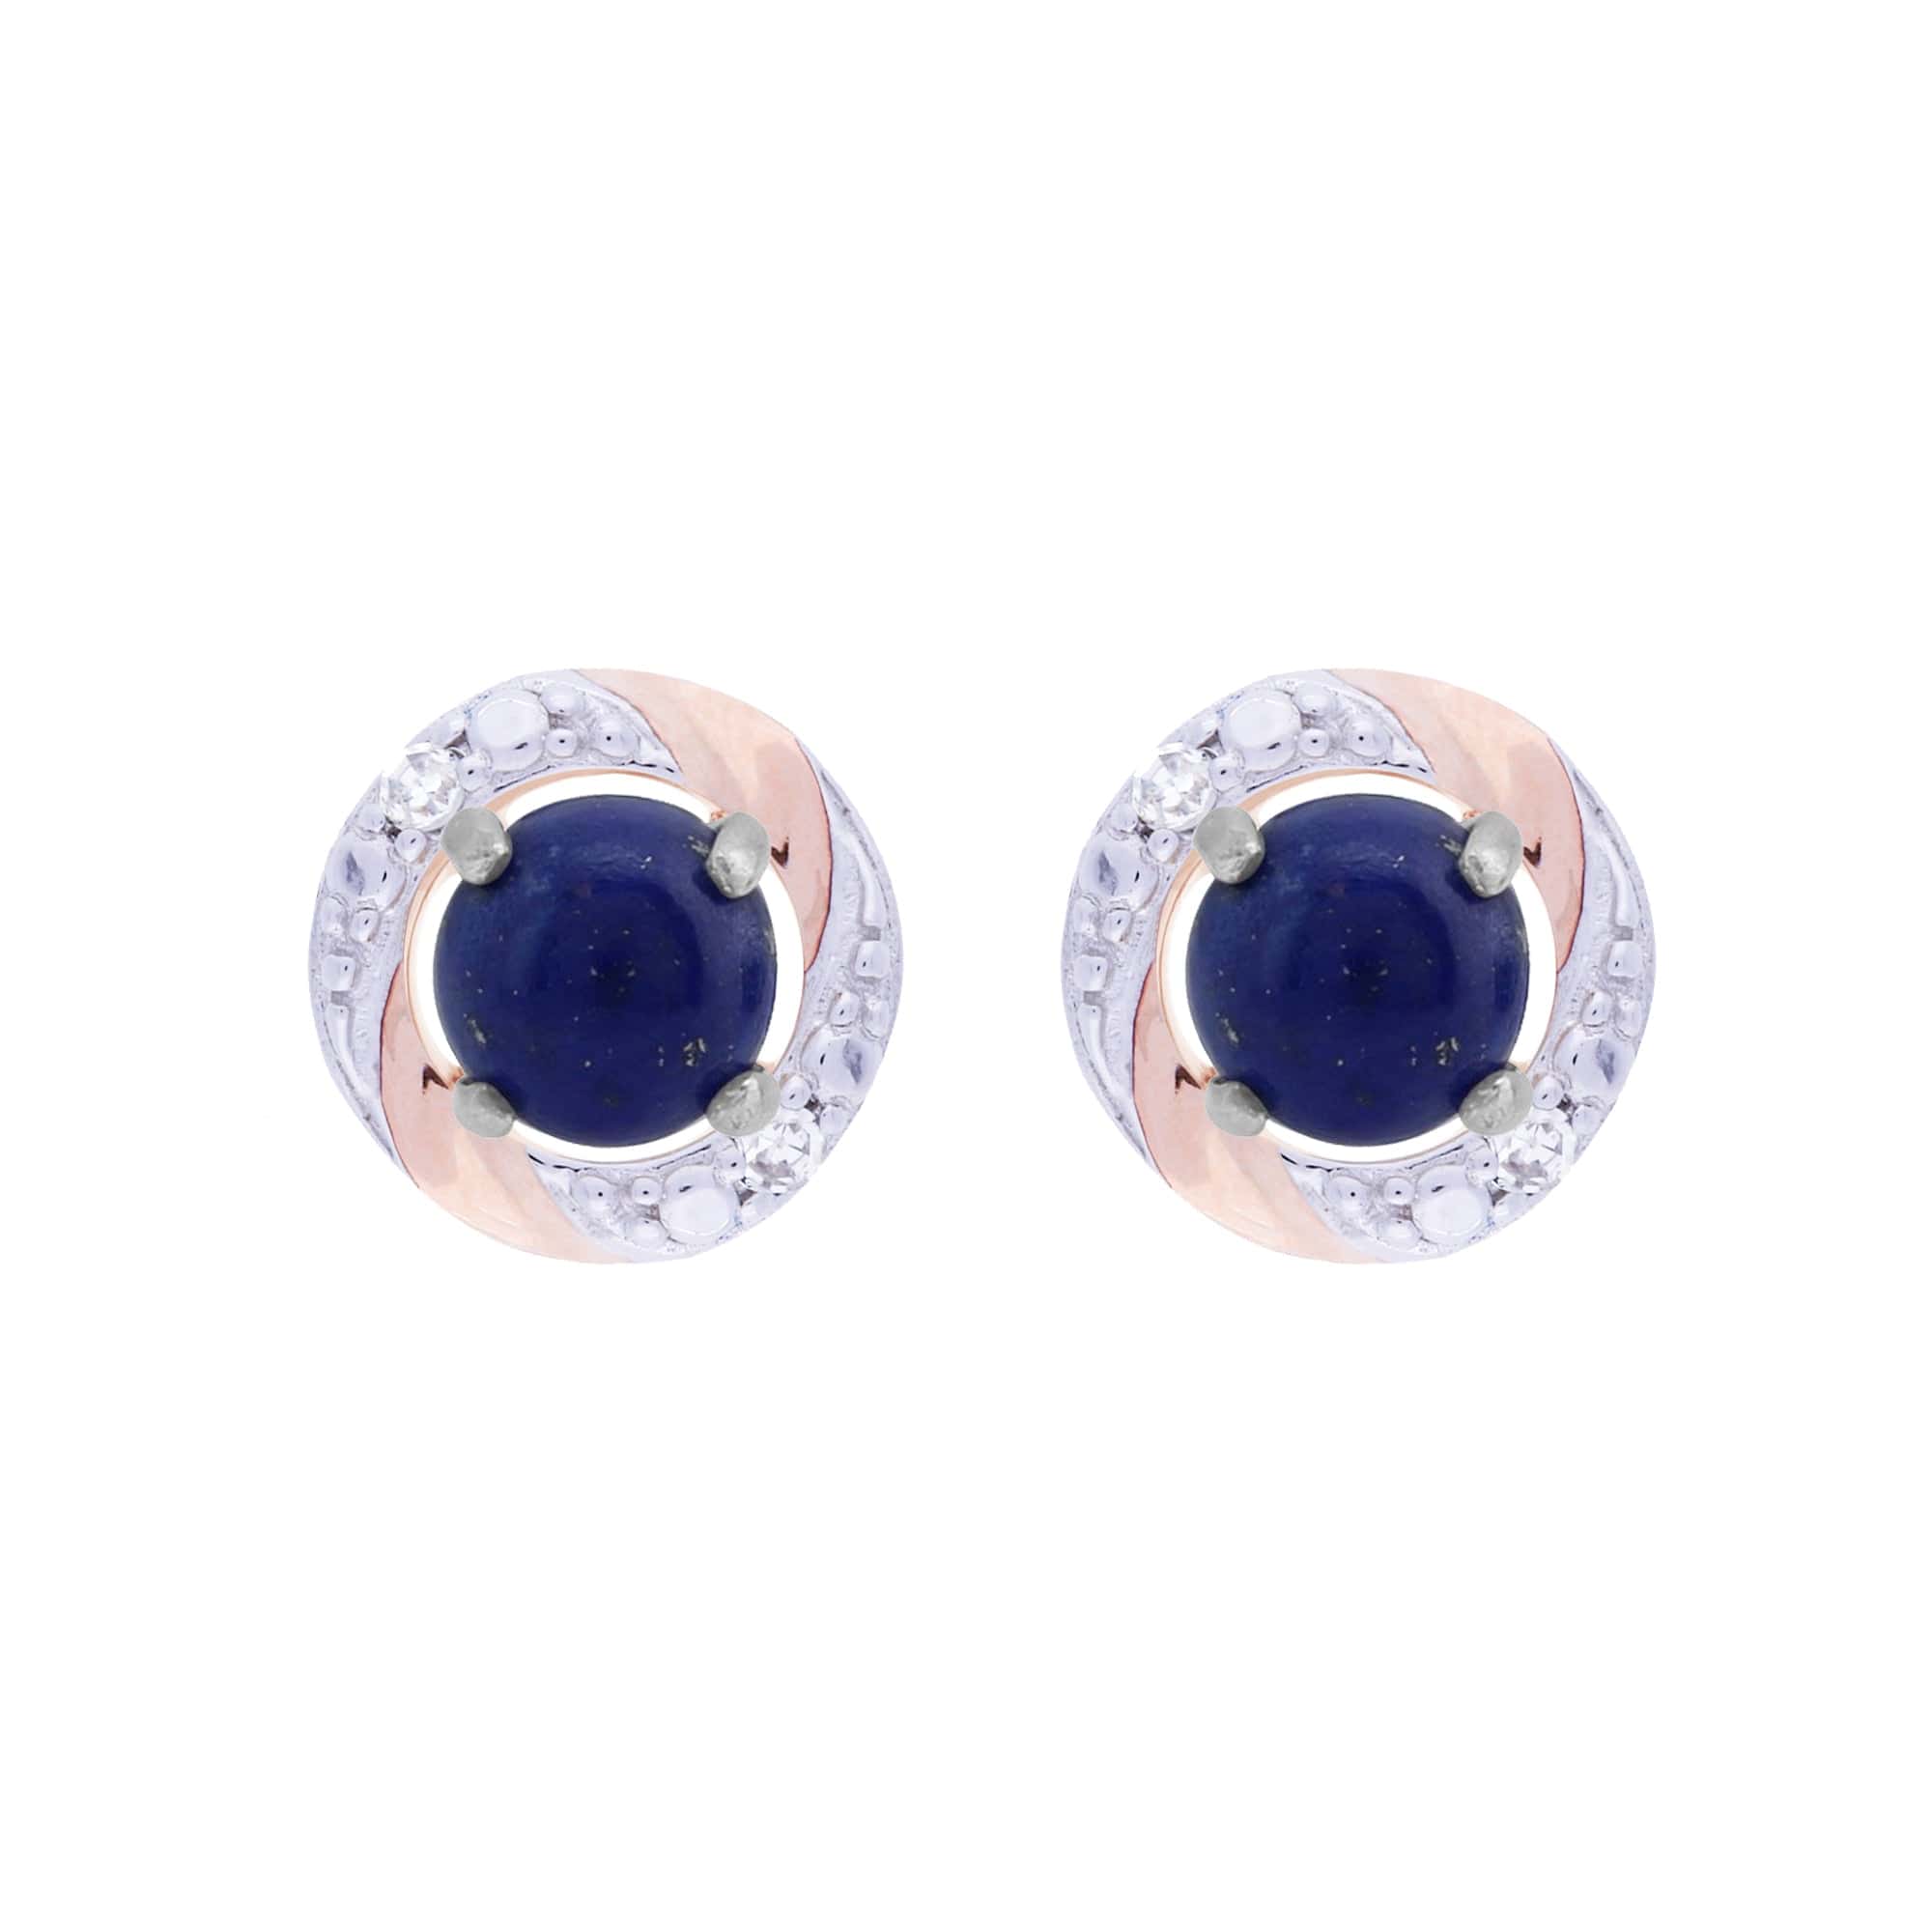 162E0071199-191E0378019 Classic Round Lapis Lazuli Stud Earrings with Detachable Diamond Round Earrings Jacket Set in 9ct White Gold 1